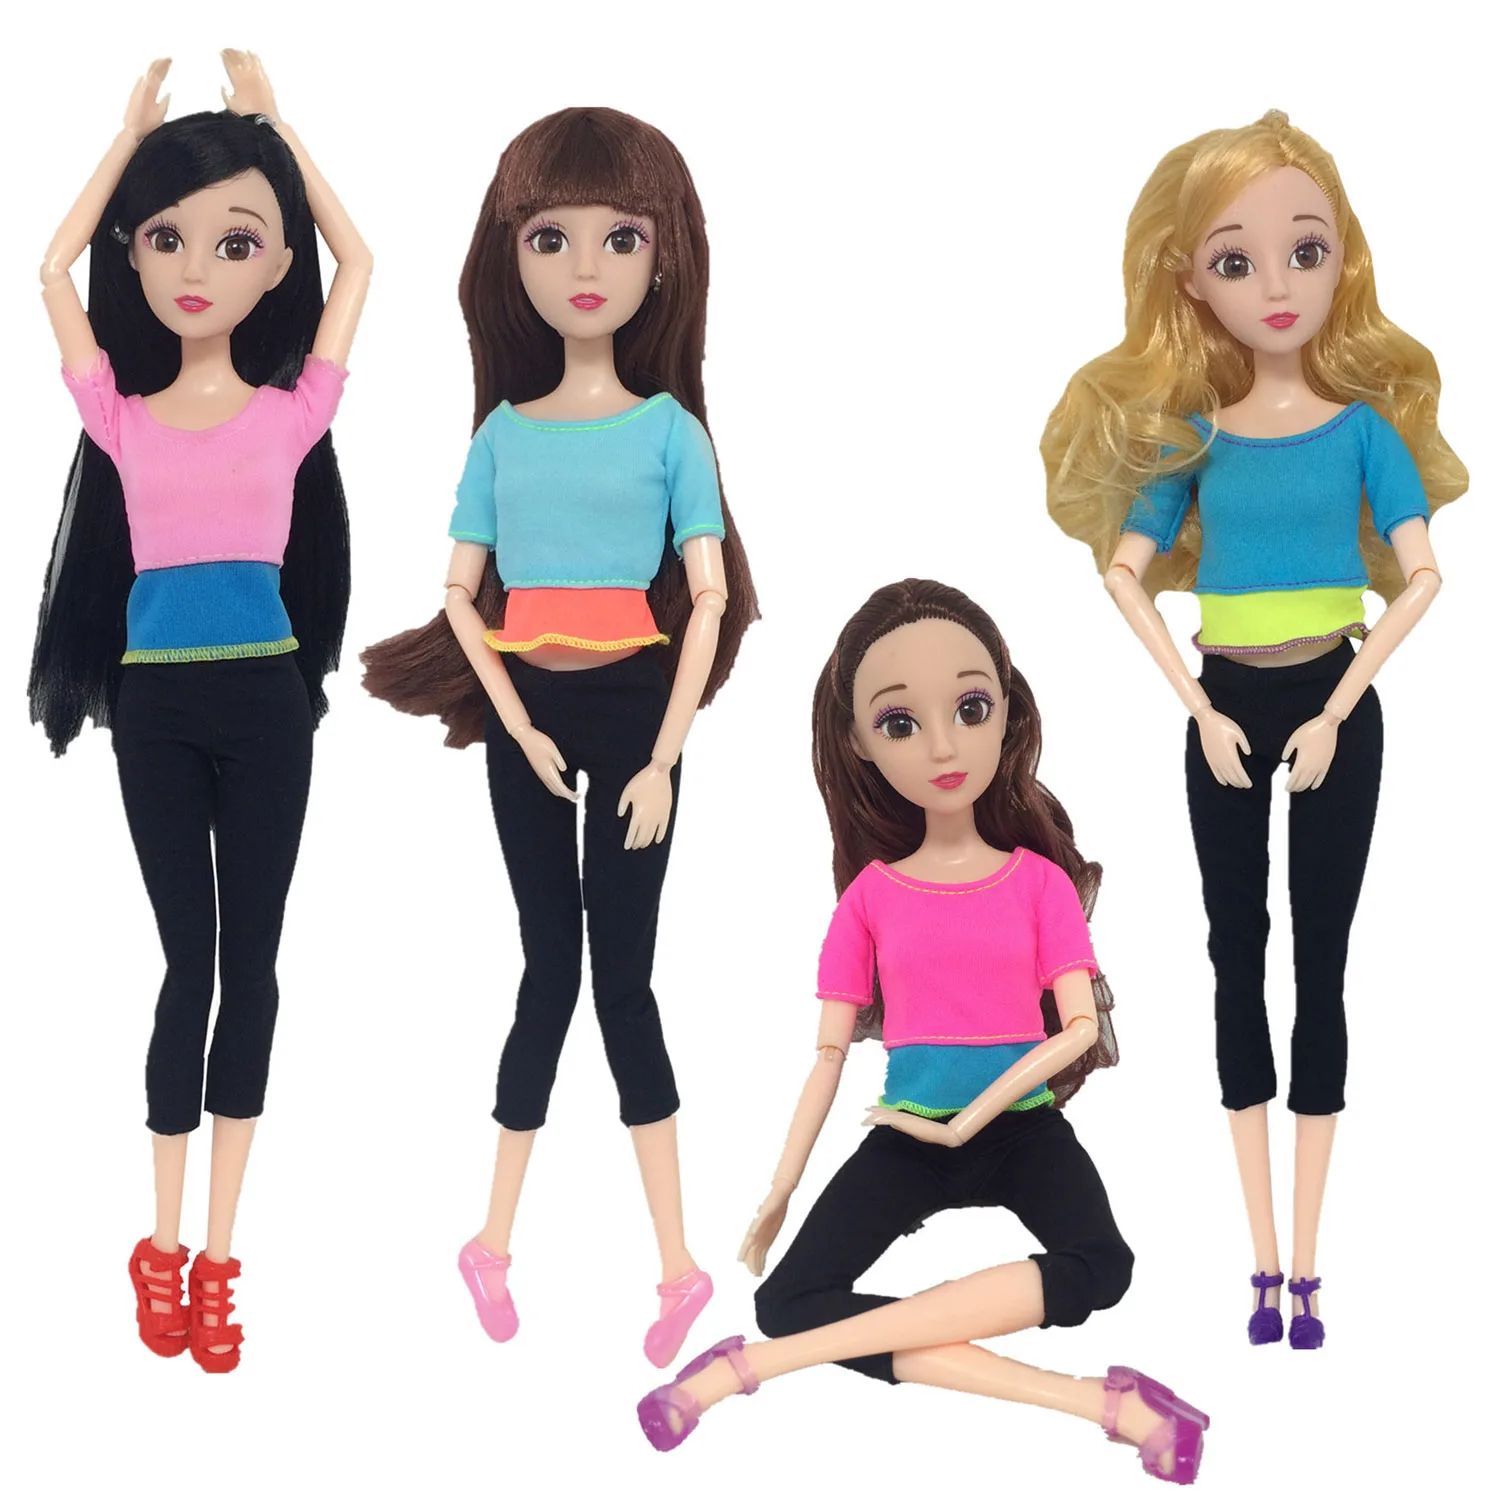 Besegad 3 комплекта мода мини-куколка Йога Жилет Брюки Топы Брюки Костюмы футболка брюки спортивная одежда аксессуары для Барби игрушка